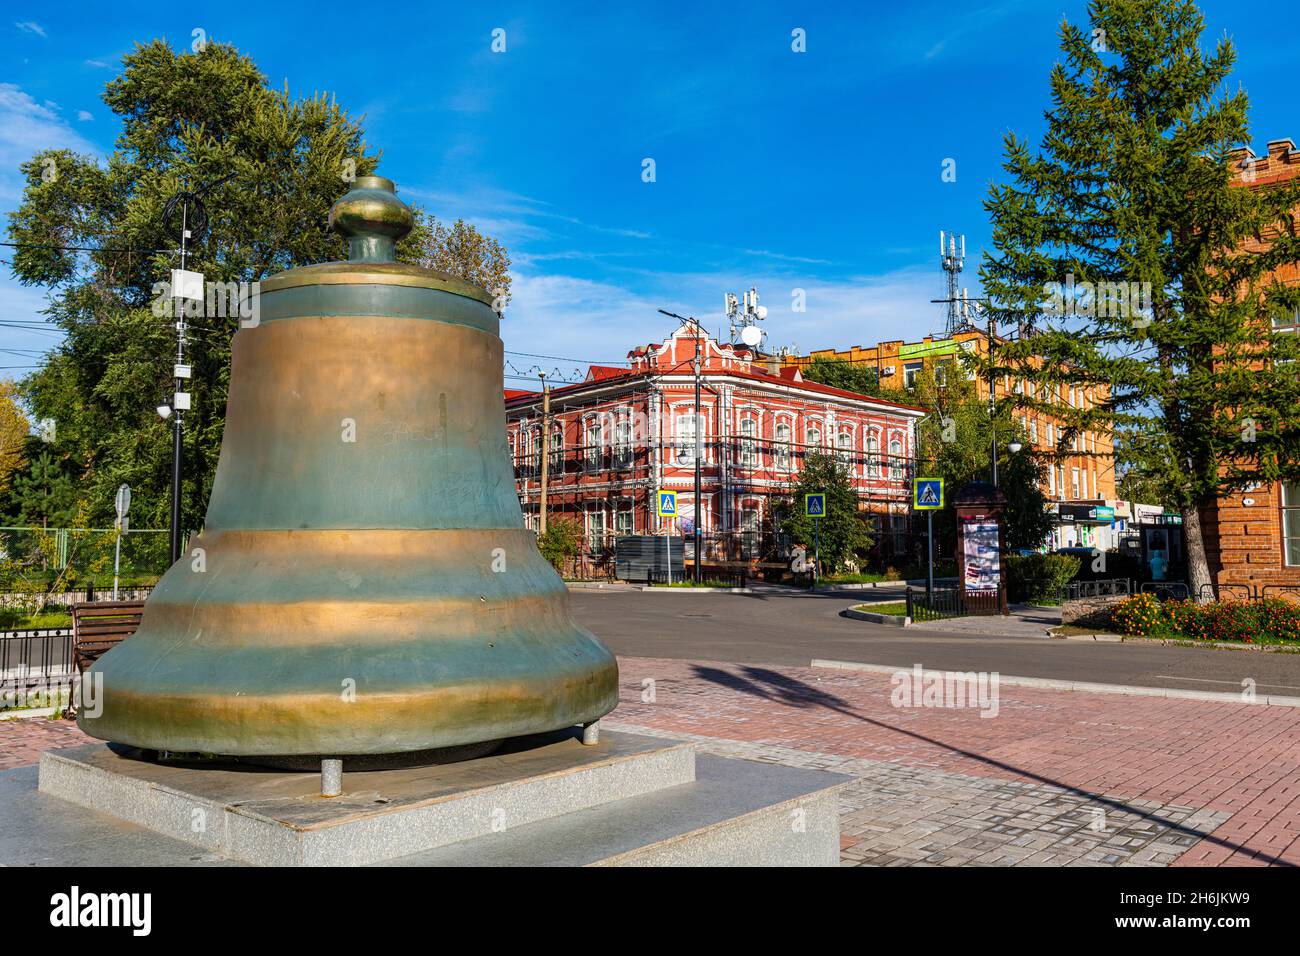 Old bell in front of Historic buildings, Minusinsk, Krasnoyarsk Krai, Russia, Eurasia Stock Photo